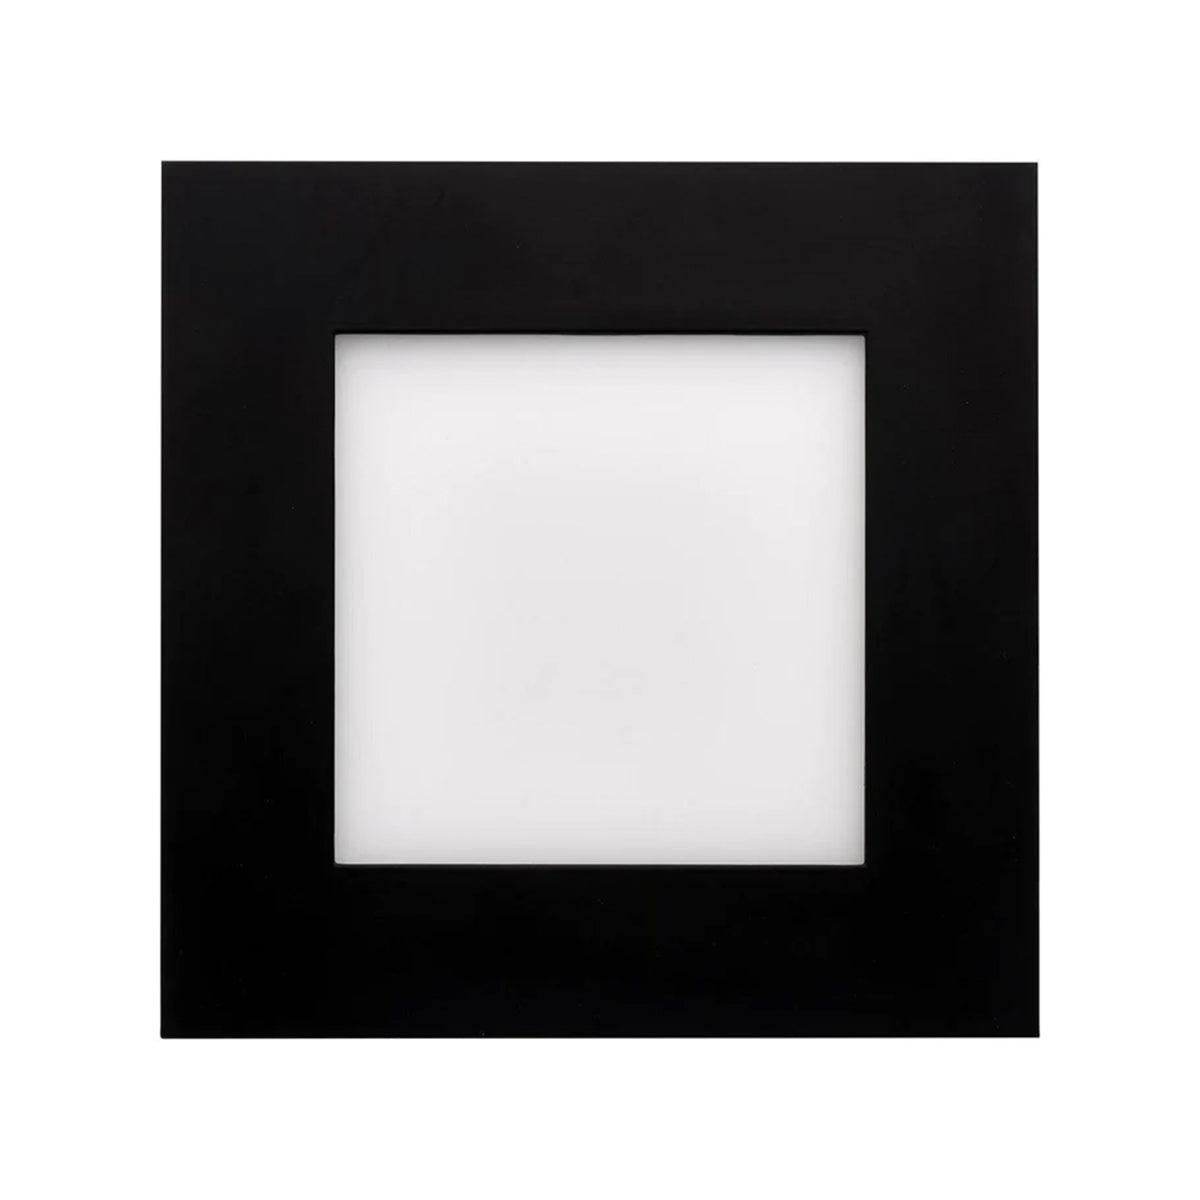 Slim Fit Canless LED Recessed Light, 6 inch, Edge-Lit, Square, 12 Watt, 750 Lumens, Selectable CCT, 2700K to 5000K, Black Finish